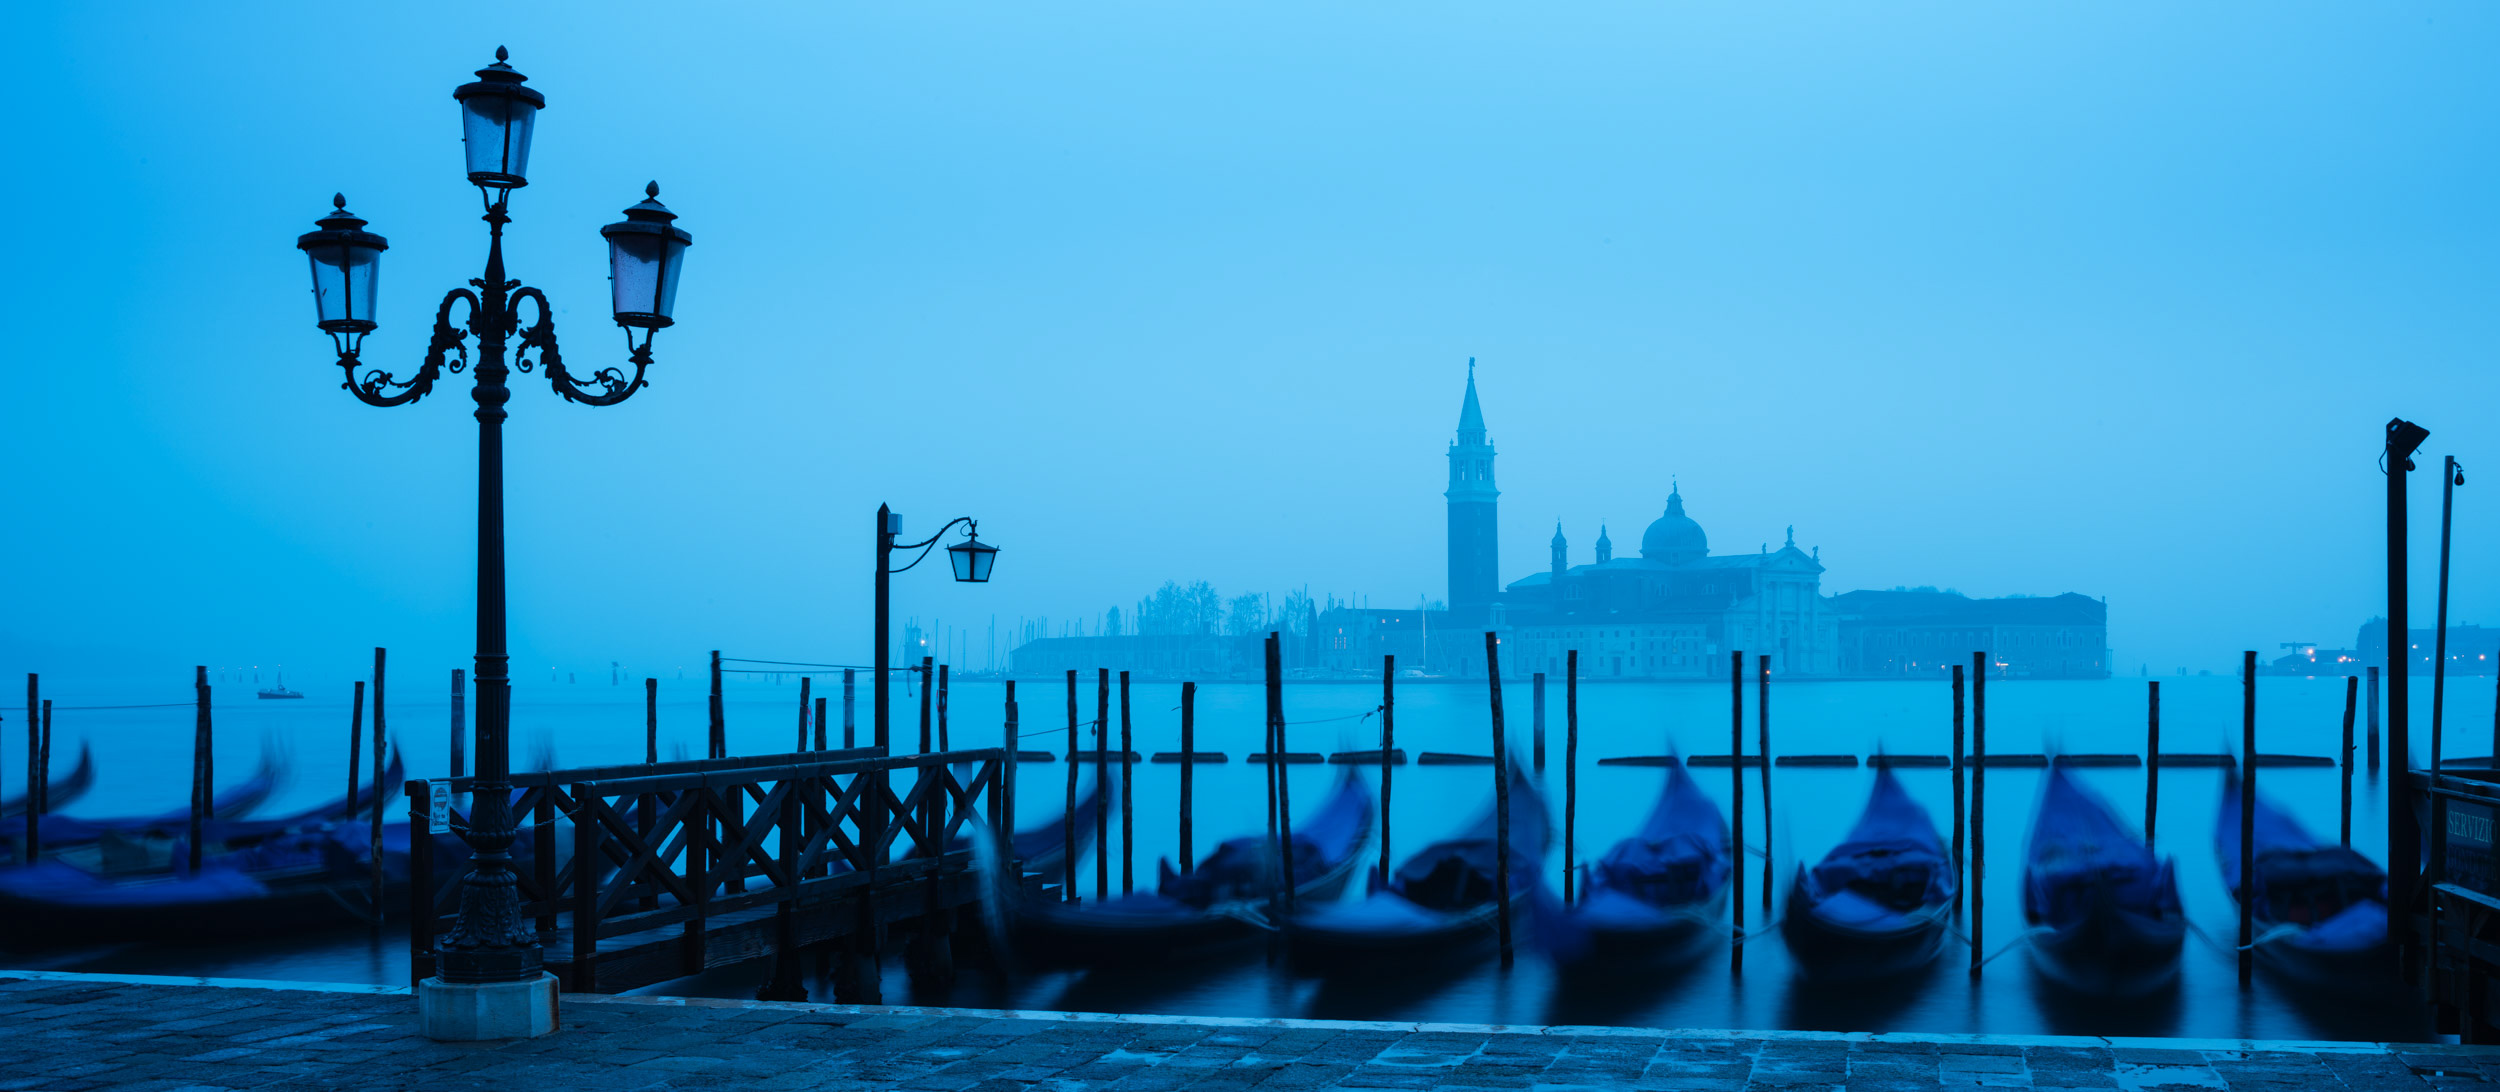 gondolas-san-marco-dawn-blue-overcast-tranquil-venice-italy-travel